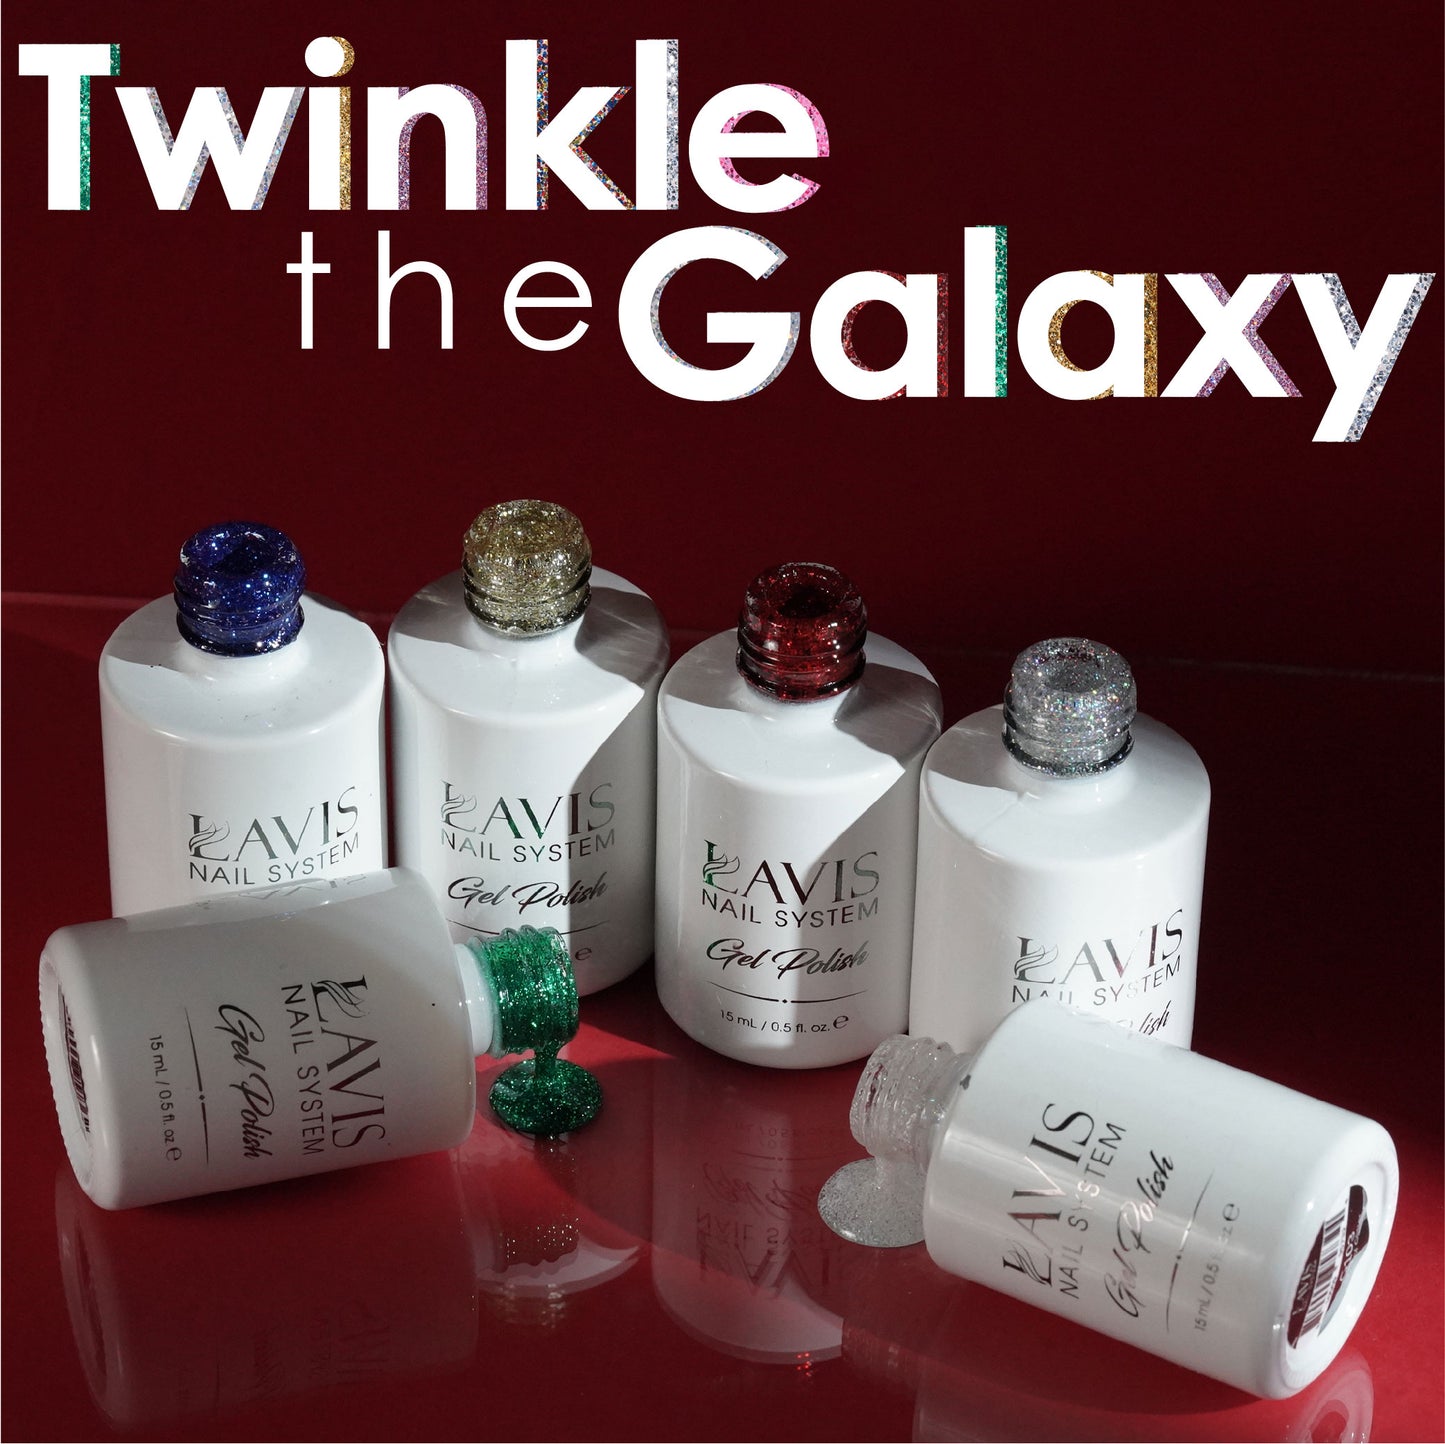 Lavis Gel Twinkle The Galaxy Set G6 (9 colors) : 097, 098, 099, 100, 102, 103, 105, 106, 107